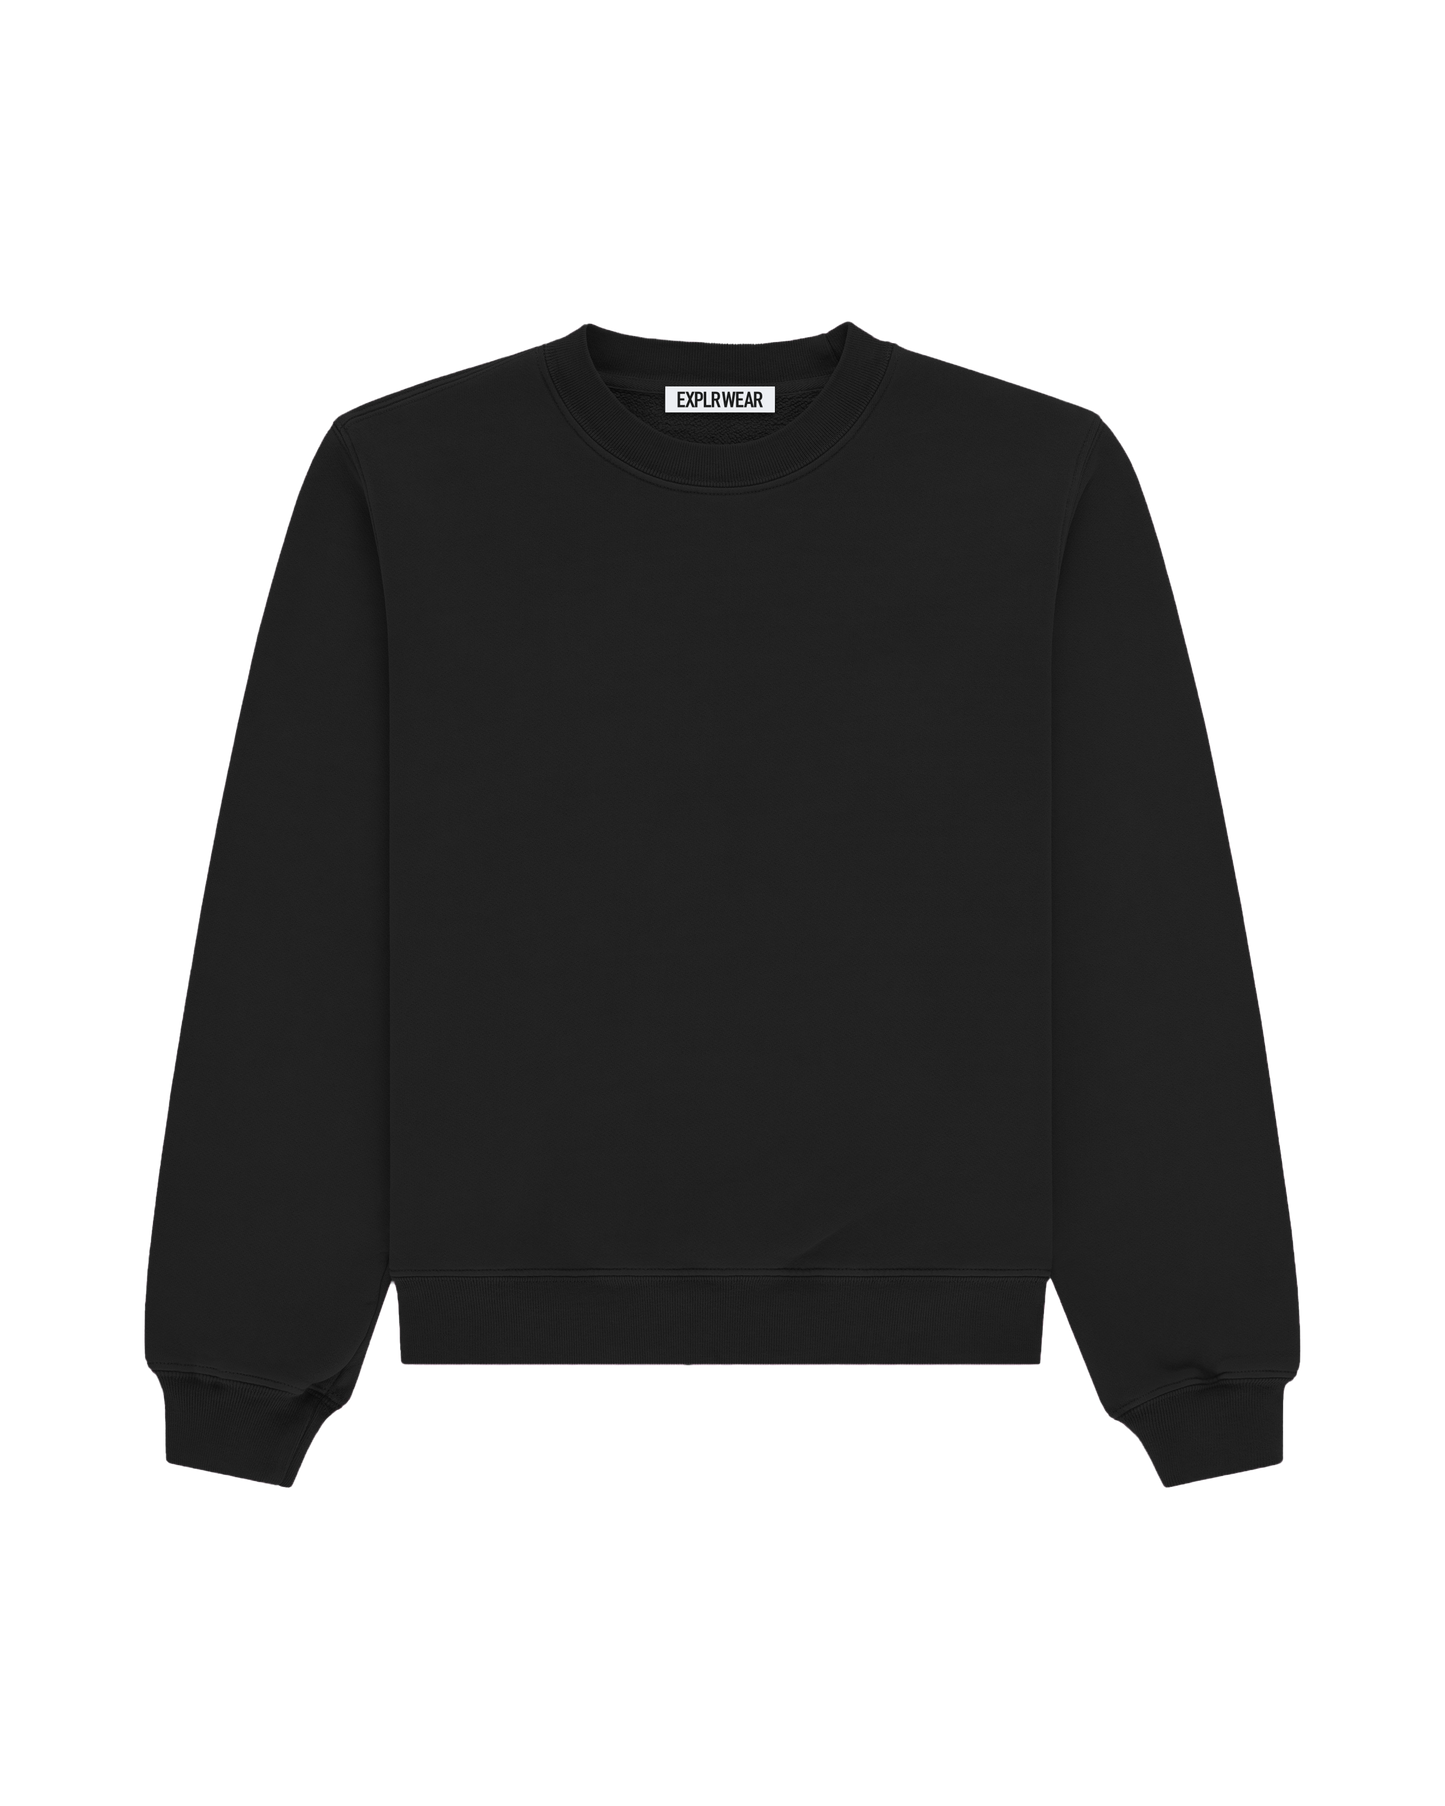 The Basics - Sweatshirt - Explr